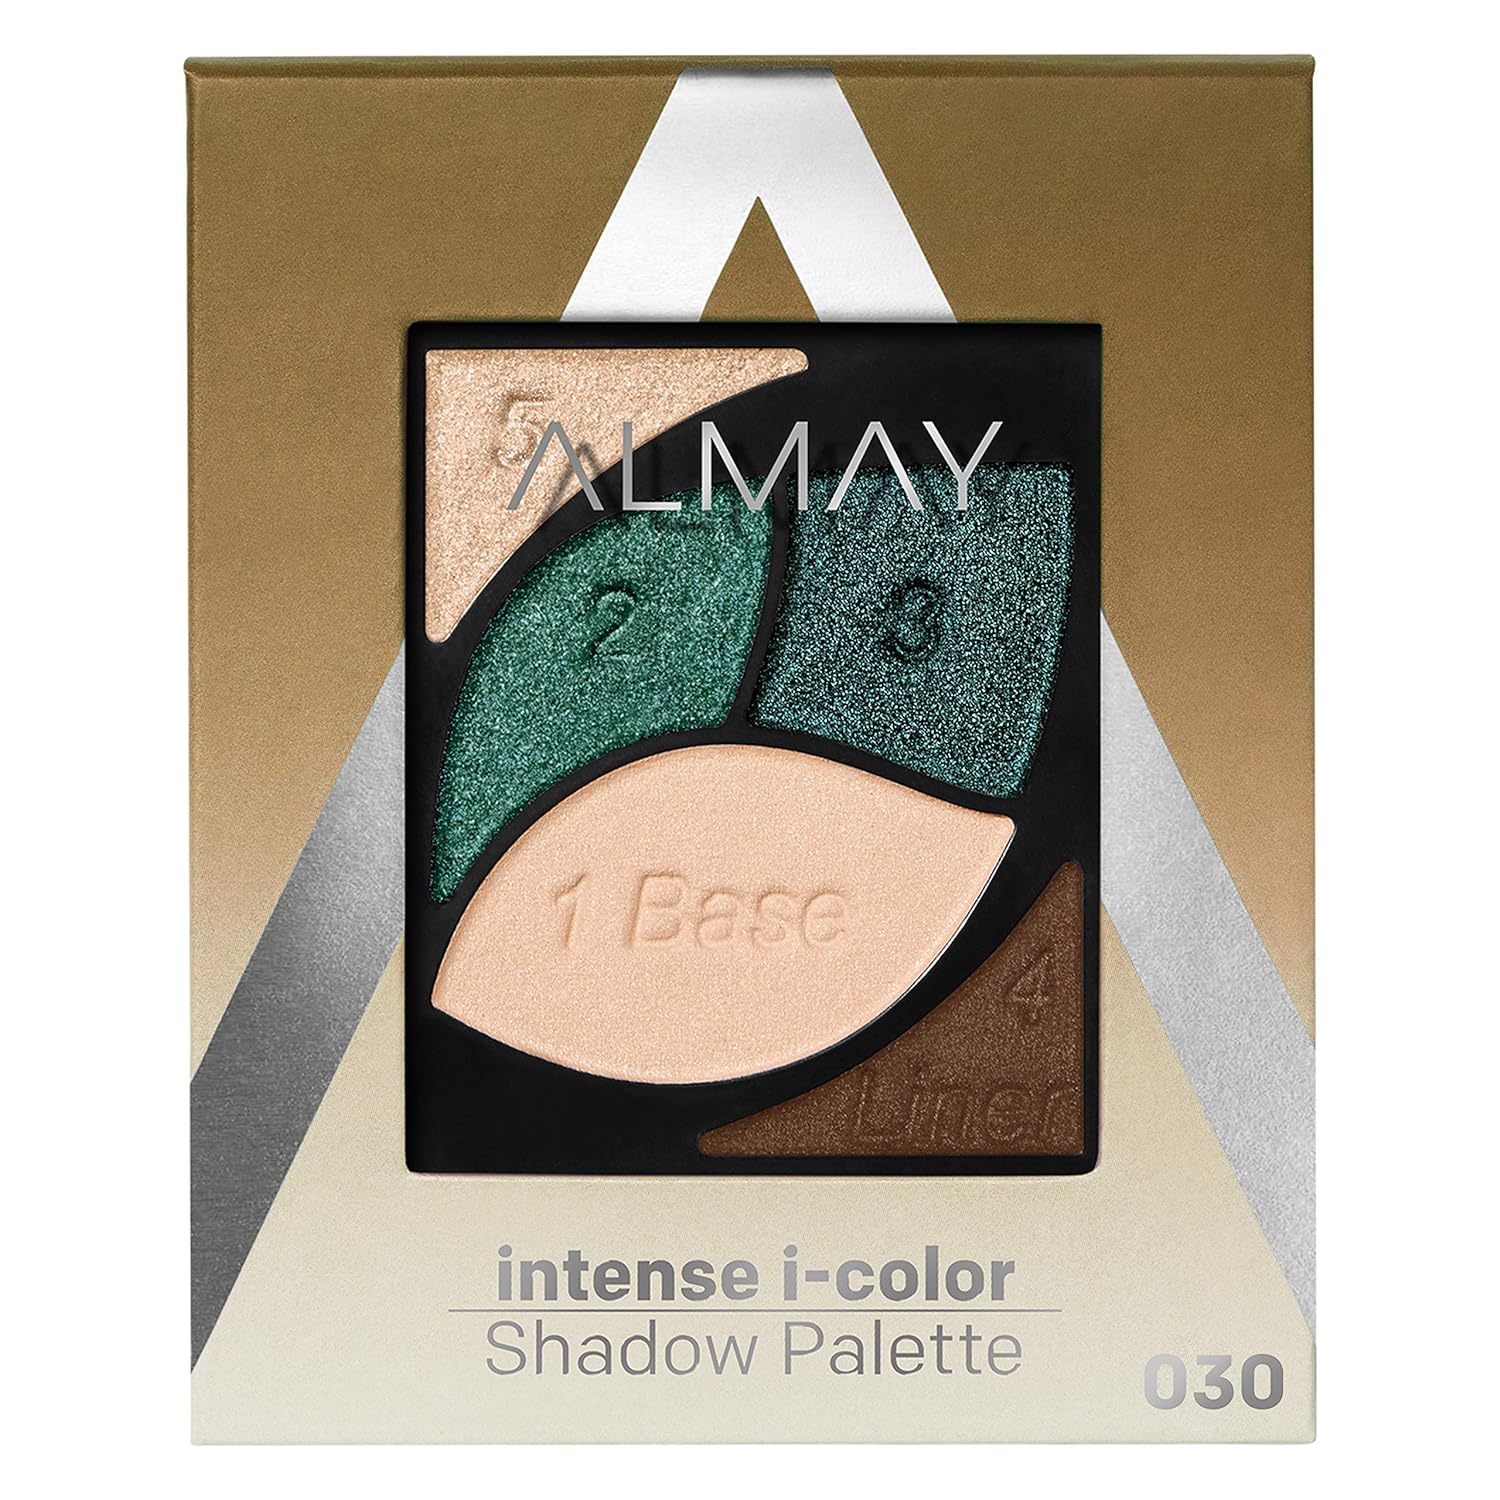 Almay Eyeshadow Palette, Longlasting Eye Makeup, Primer Enriched with Antioxidant Vitamin E, Hypoallergenic, 030 Hazel Eyes, 0.1